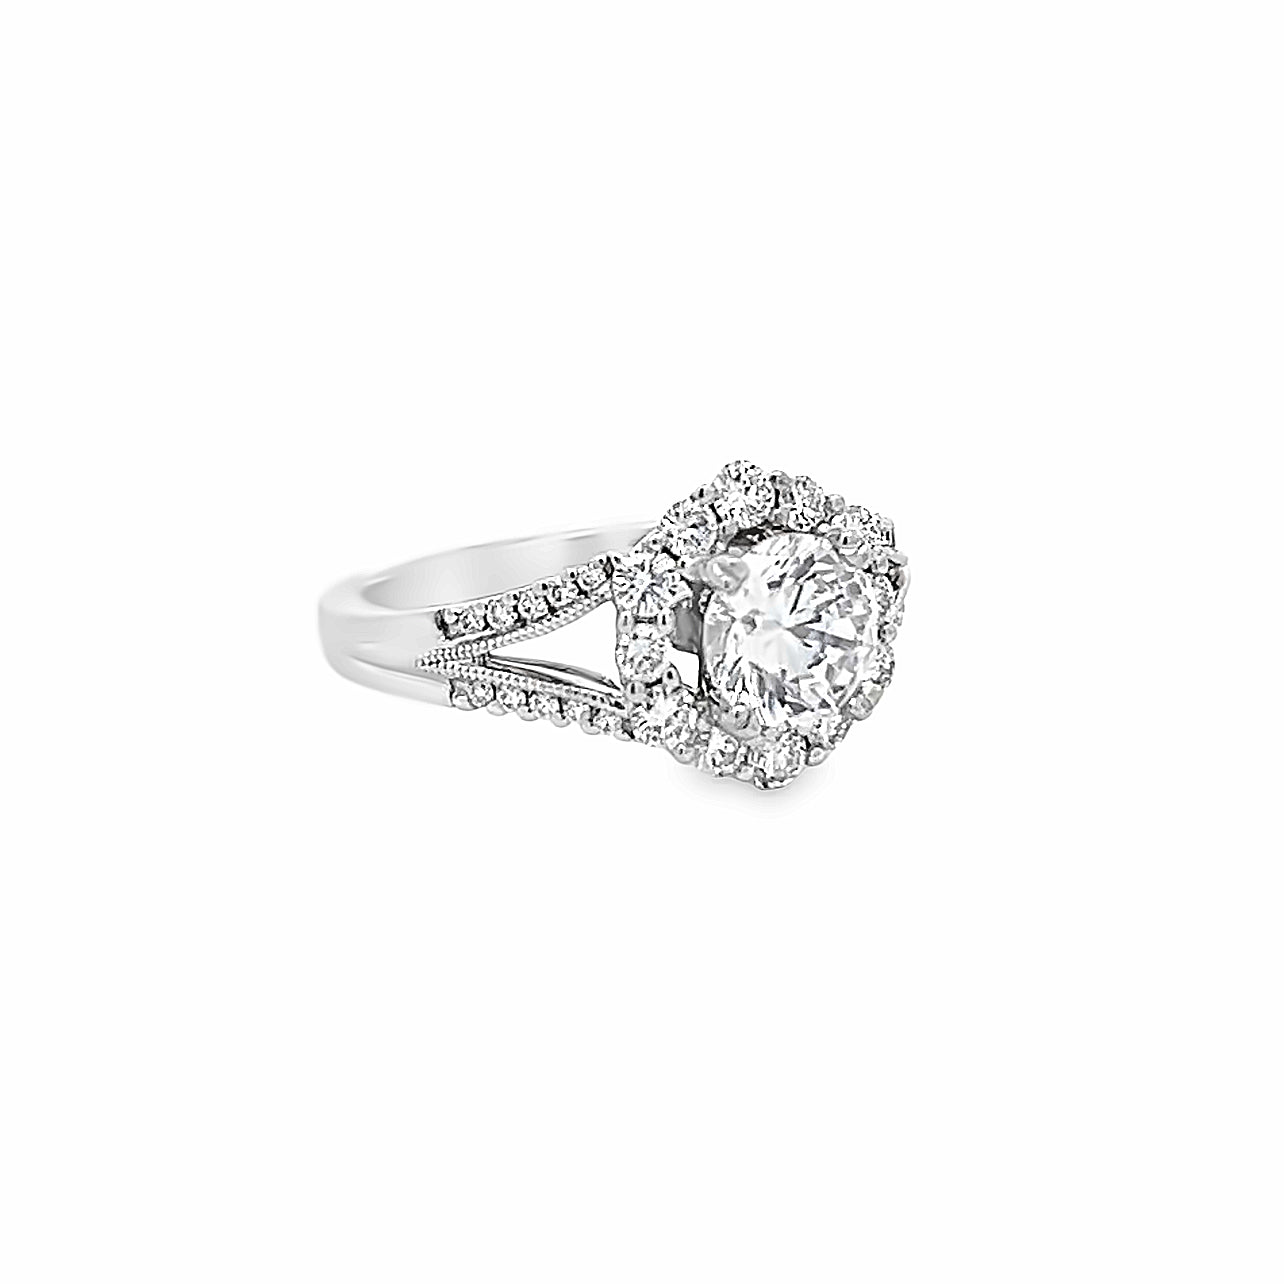 14k White Gold Round Diamond Halo Engagement Ring Setting (0.60ctw.)